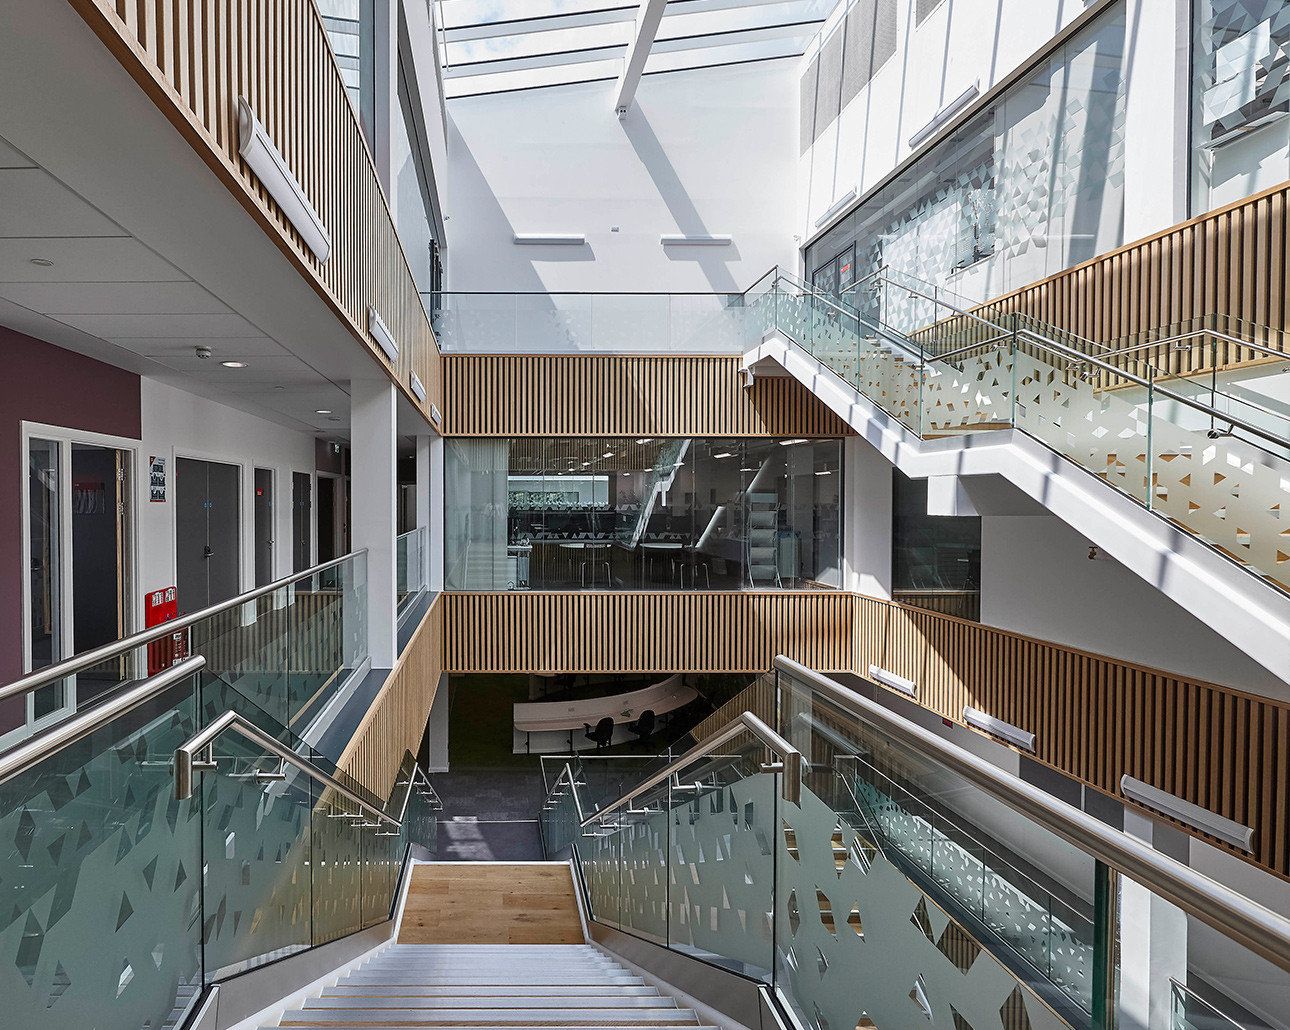 School Atrium With Customised RIB Solution | Gustafs Scandinavia